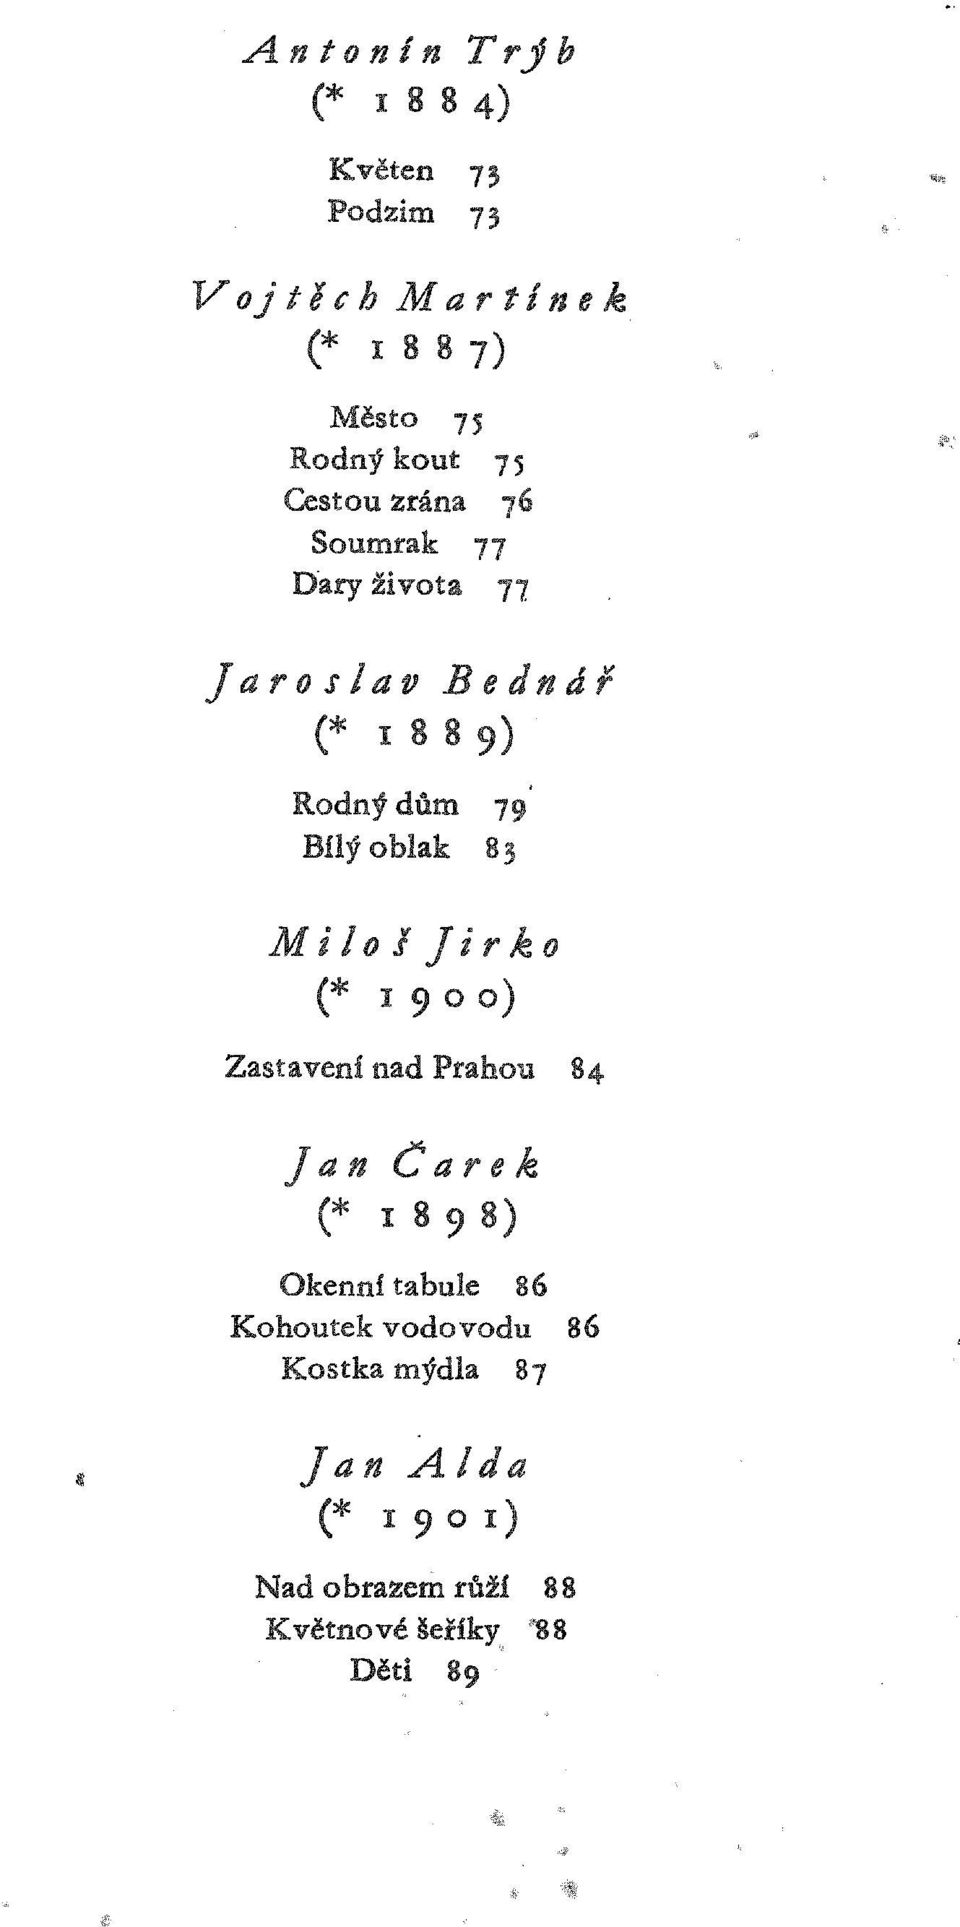 M i IO i J i r ko (* 1900) Zastavení nad Prahoa 84 Jan Carek (* 1898) Okennf tabule 86 Kohoutek